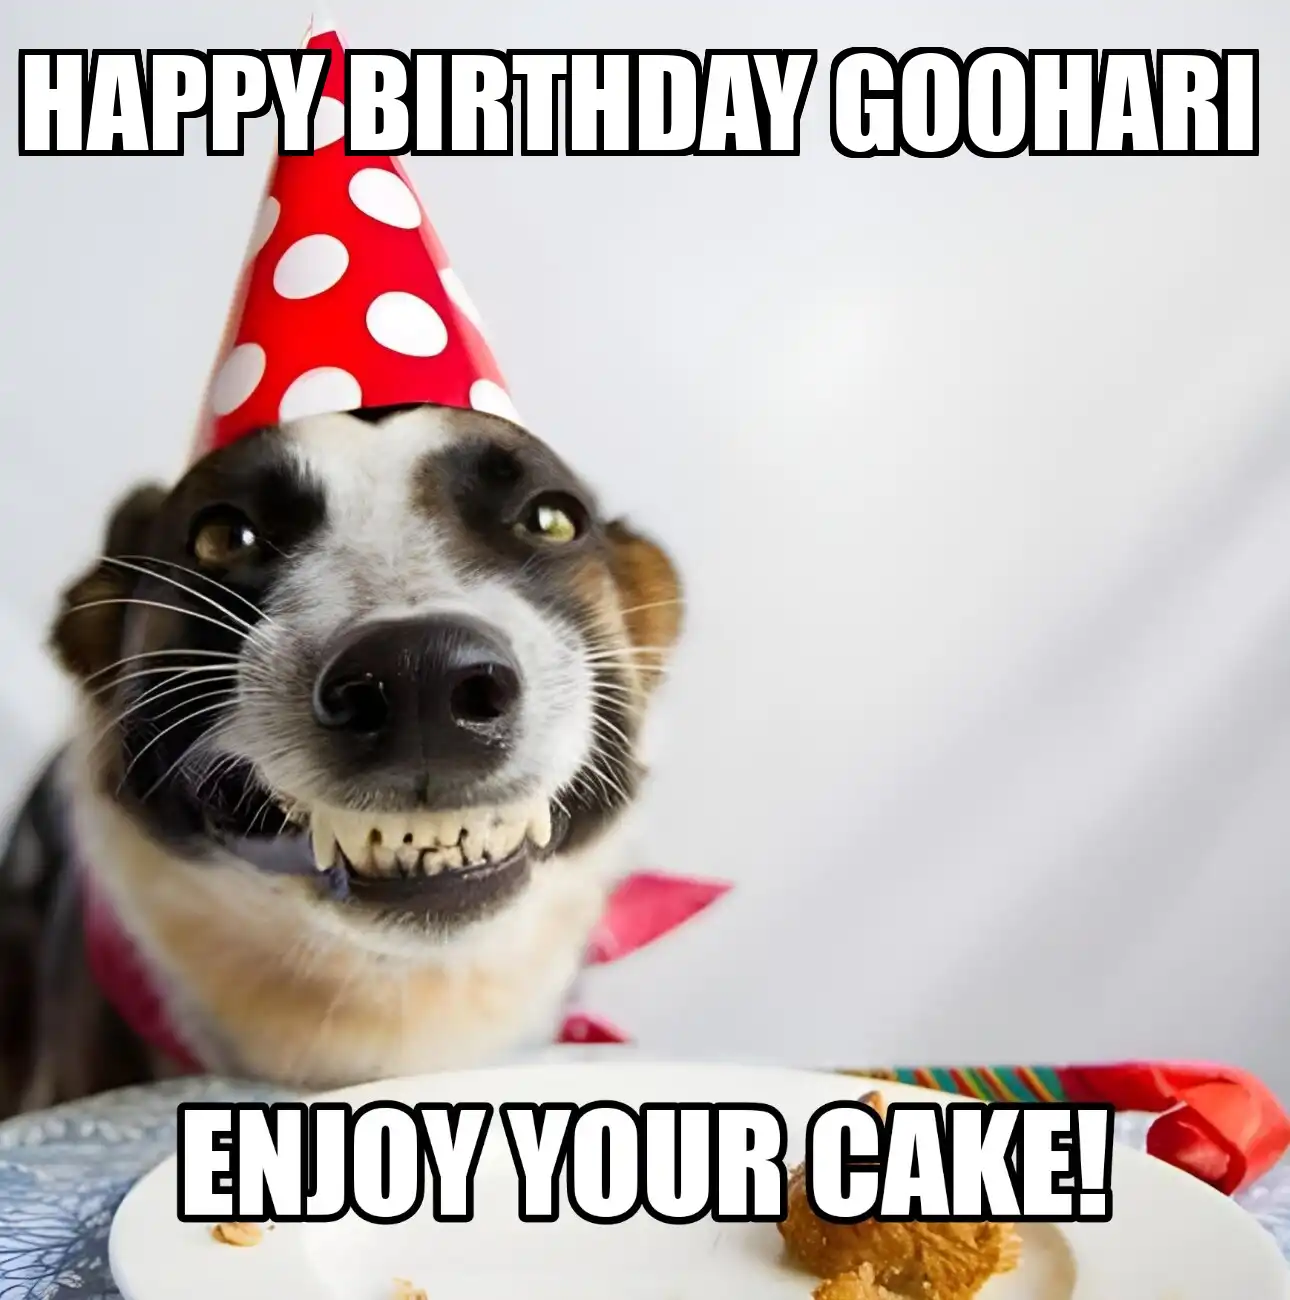 Happy Birthday Goohari Enjoy Your Cake Dog Meme